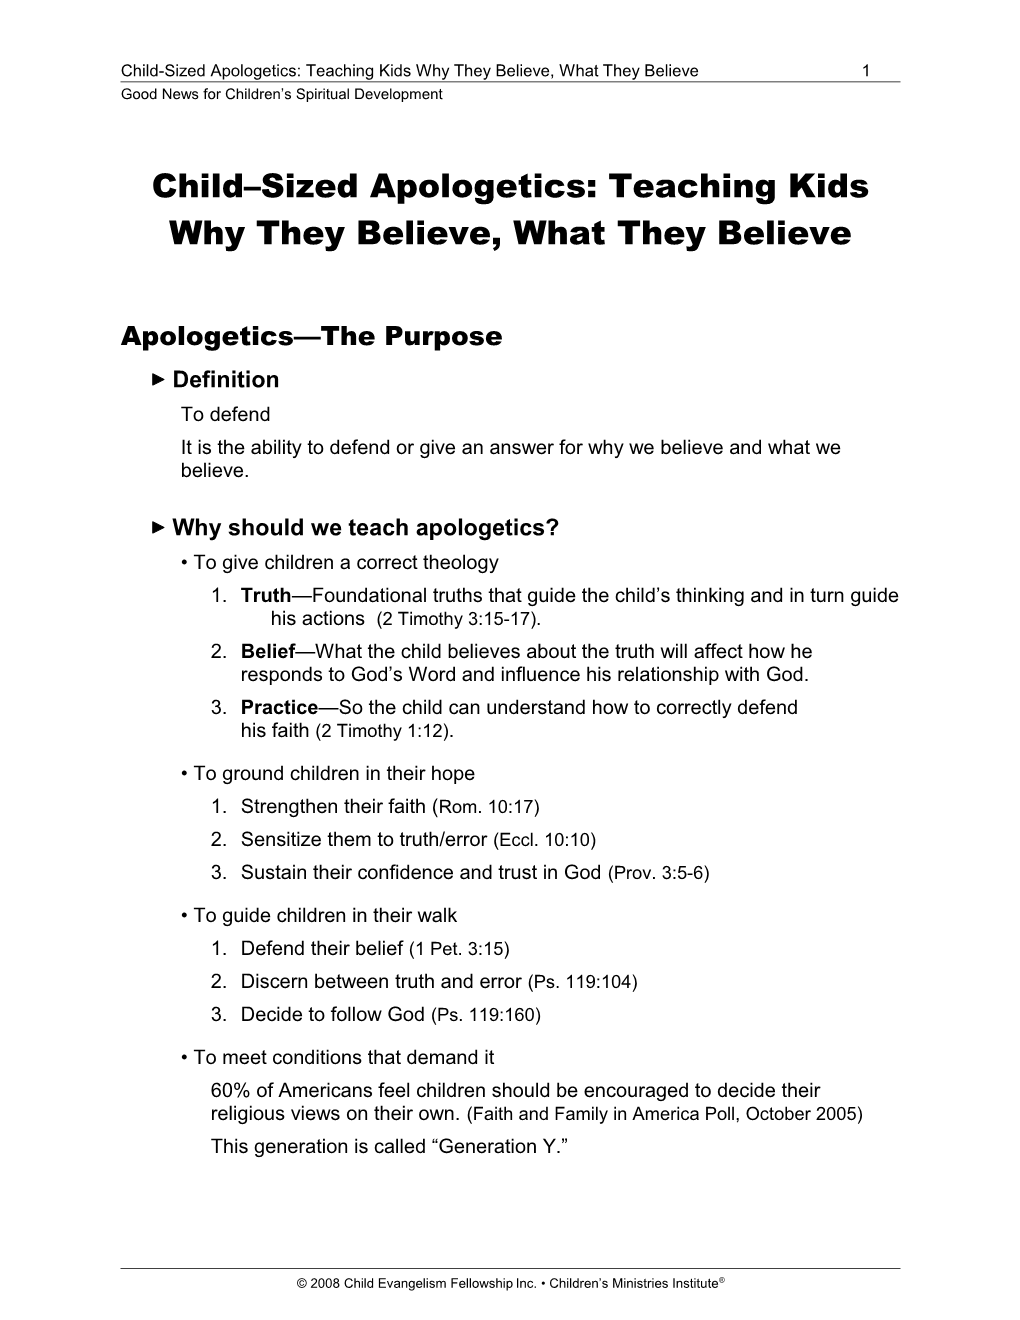 Child Sized Apologetics: Teaching Kids